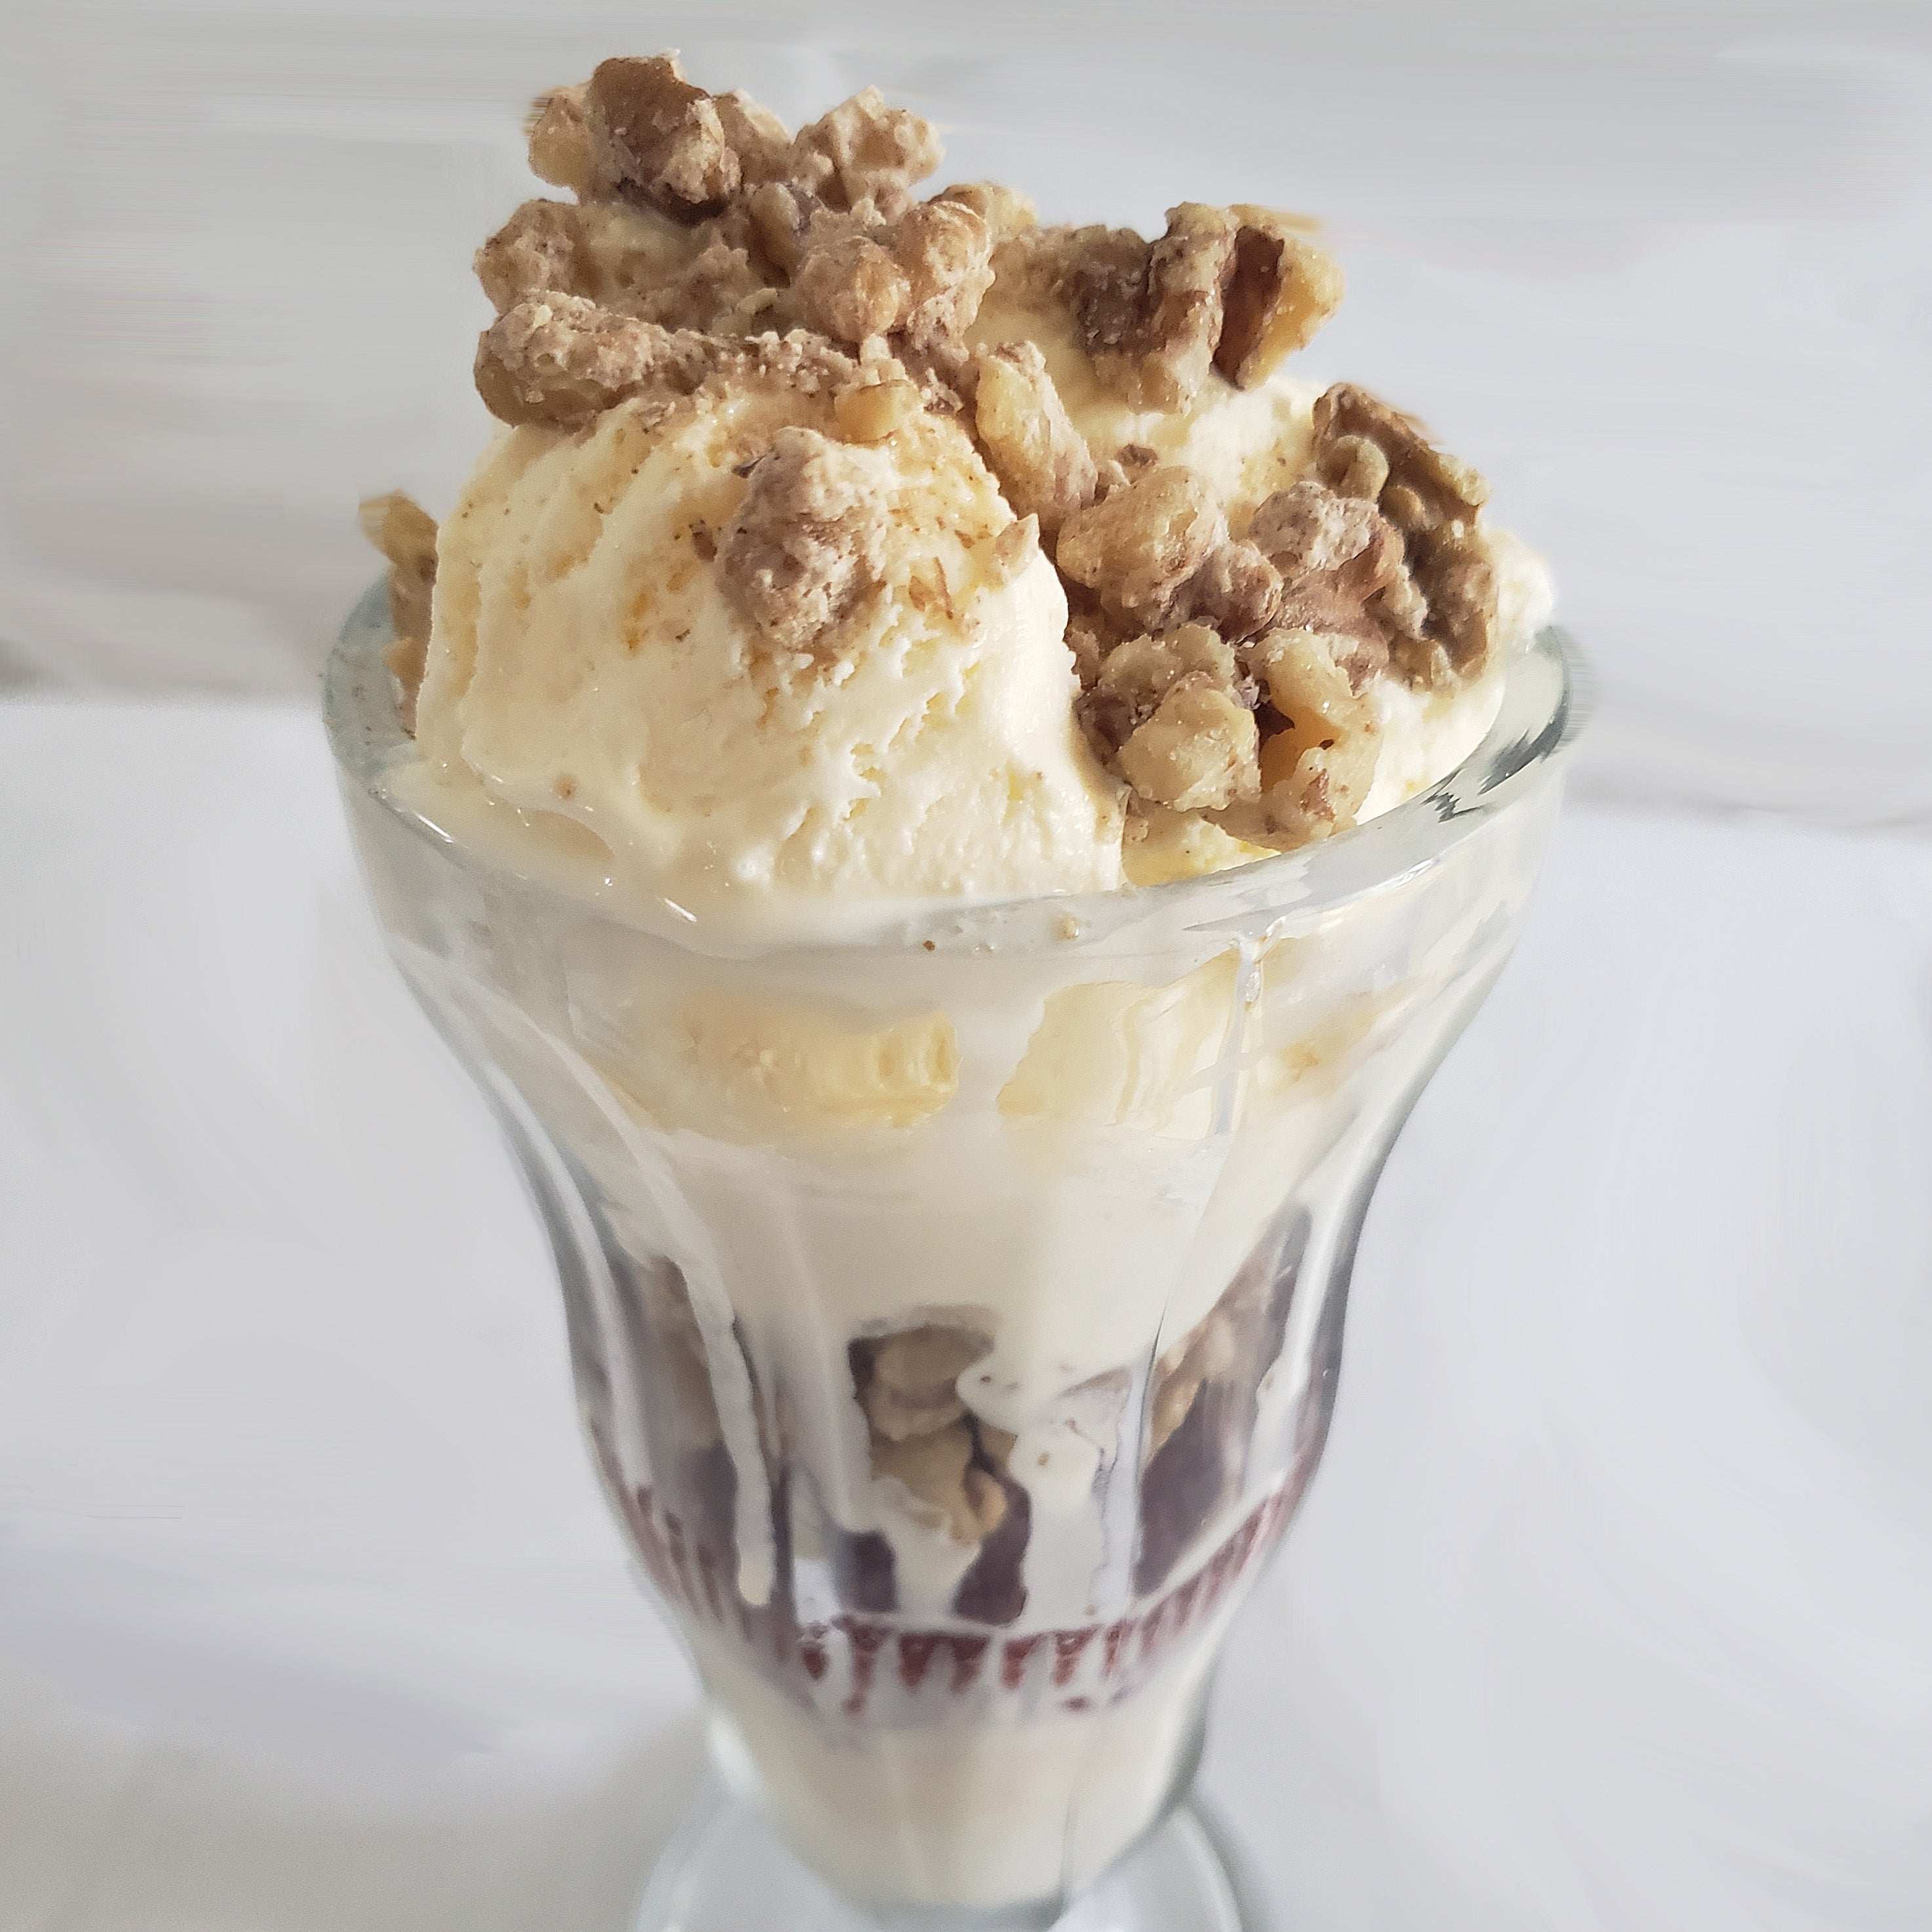 An ice cream sundae topped with oatmeal cookie coated walnut snacks